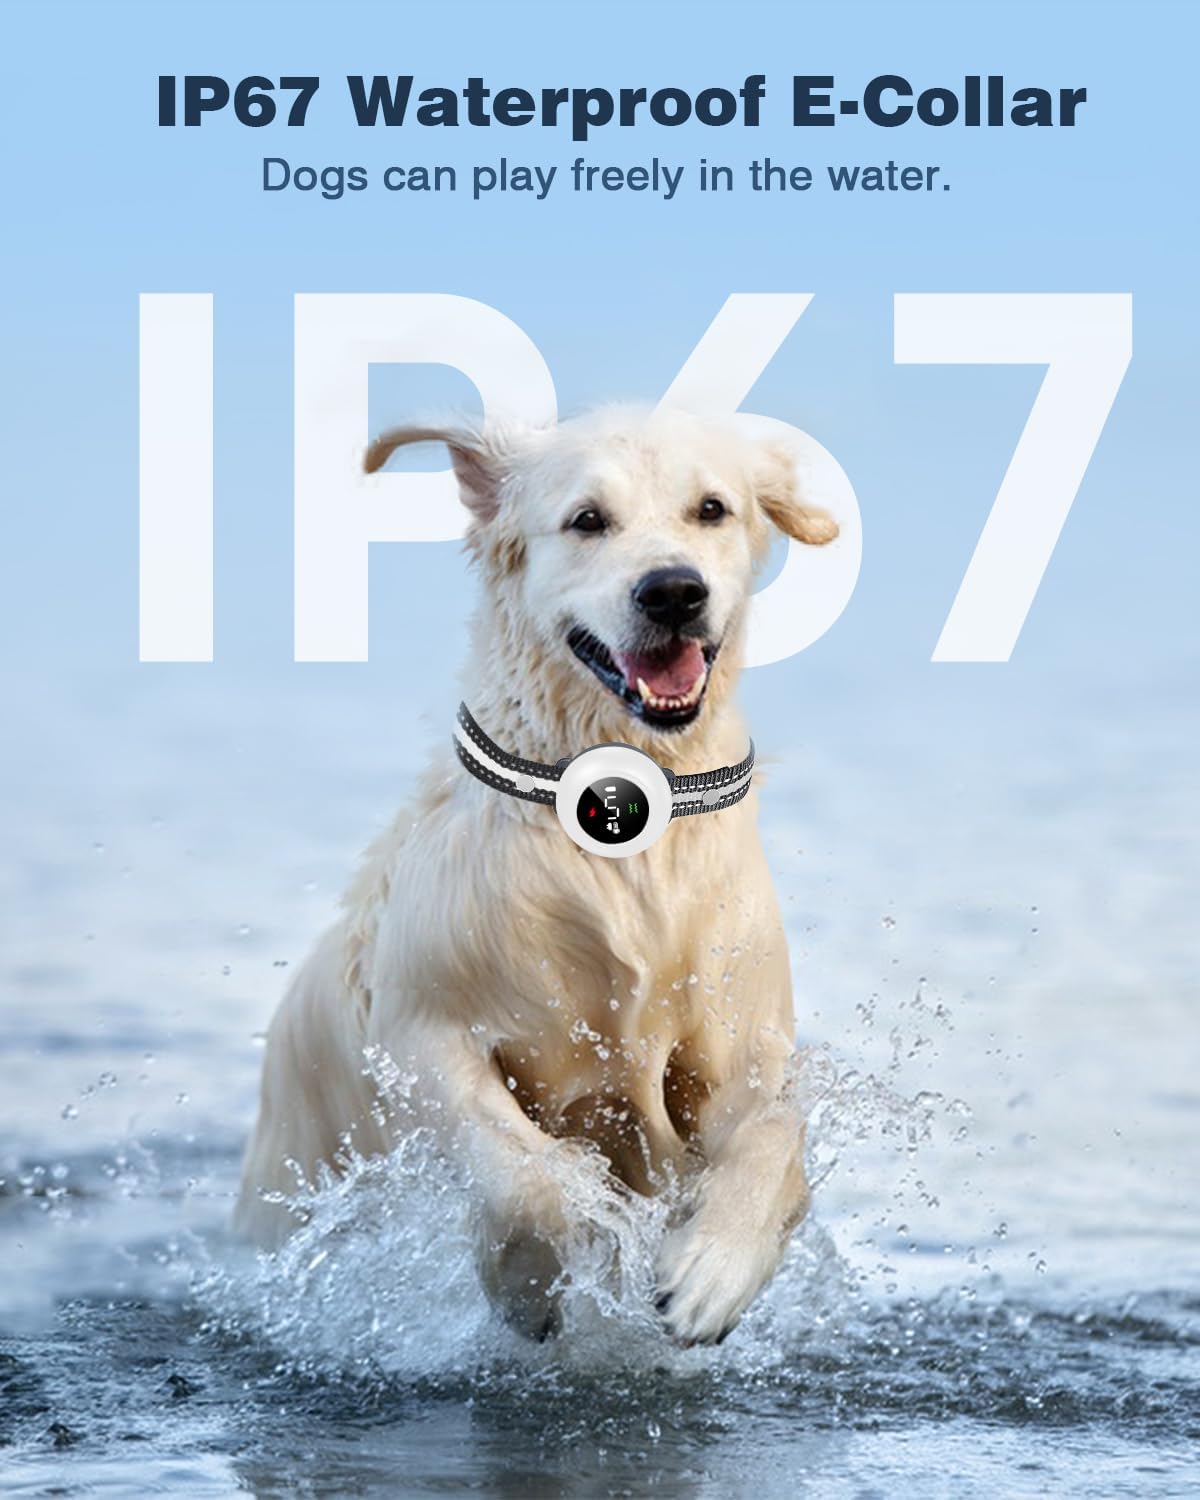 2-in-1 Dog Shock & Bark Collar - Smart Training, Adjustable Sensitivity, 3300FT Remote, Waterproof, Beep Vibration Shock